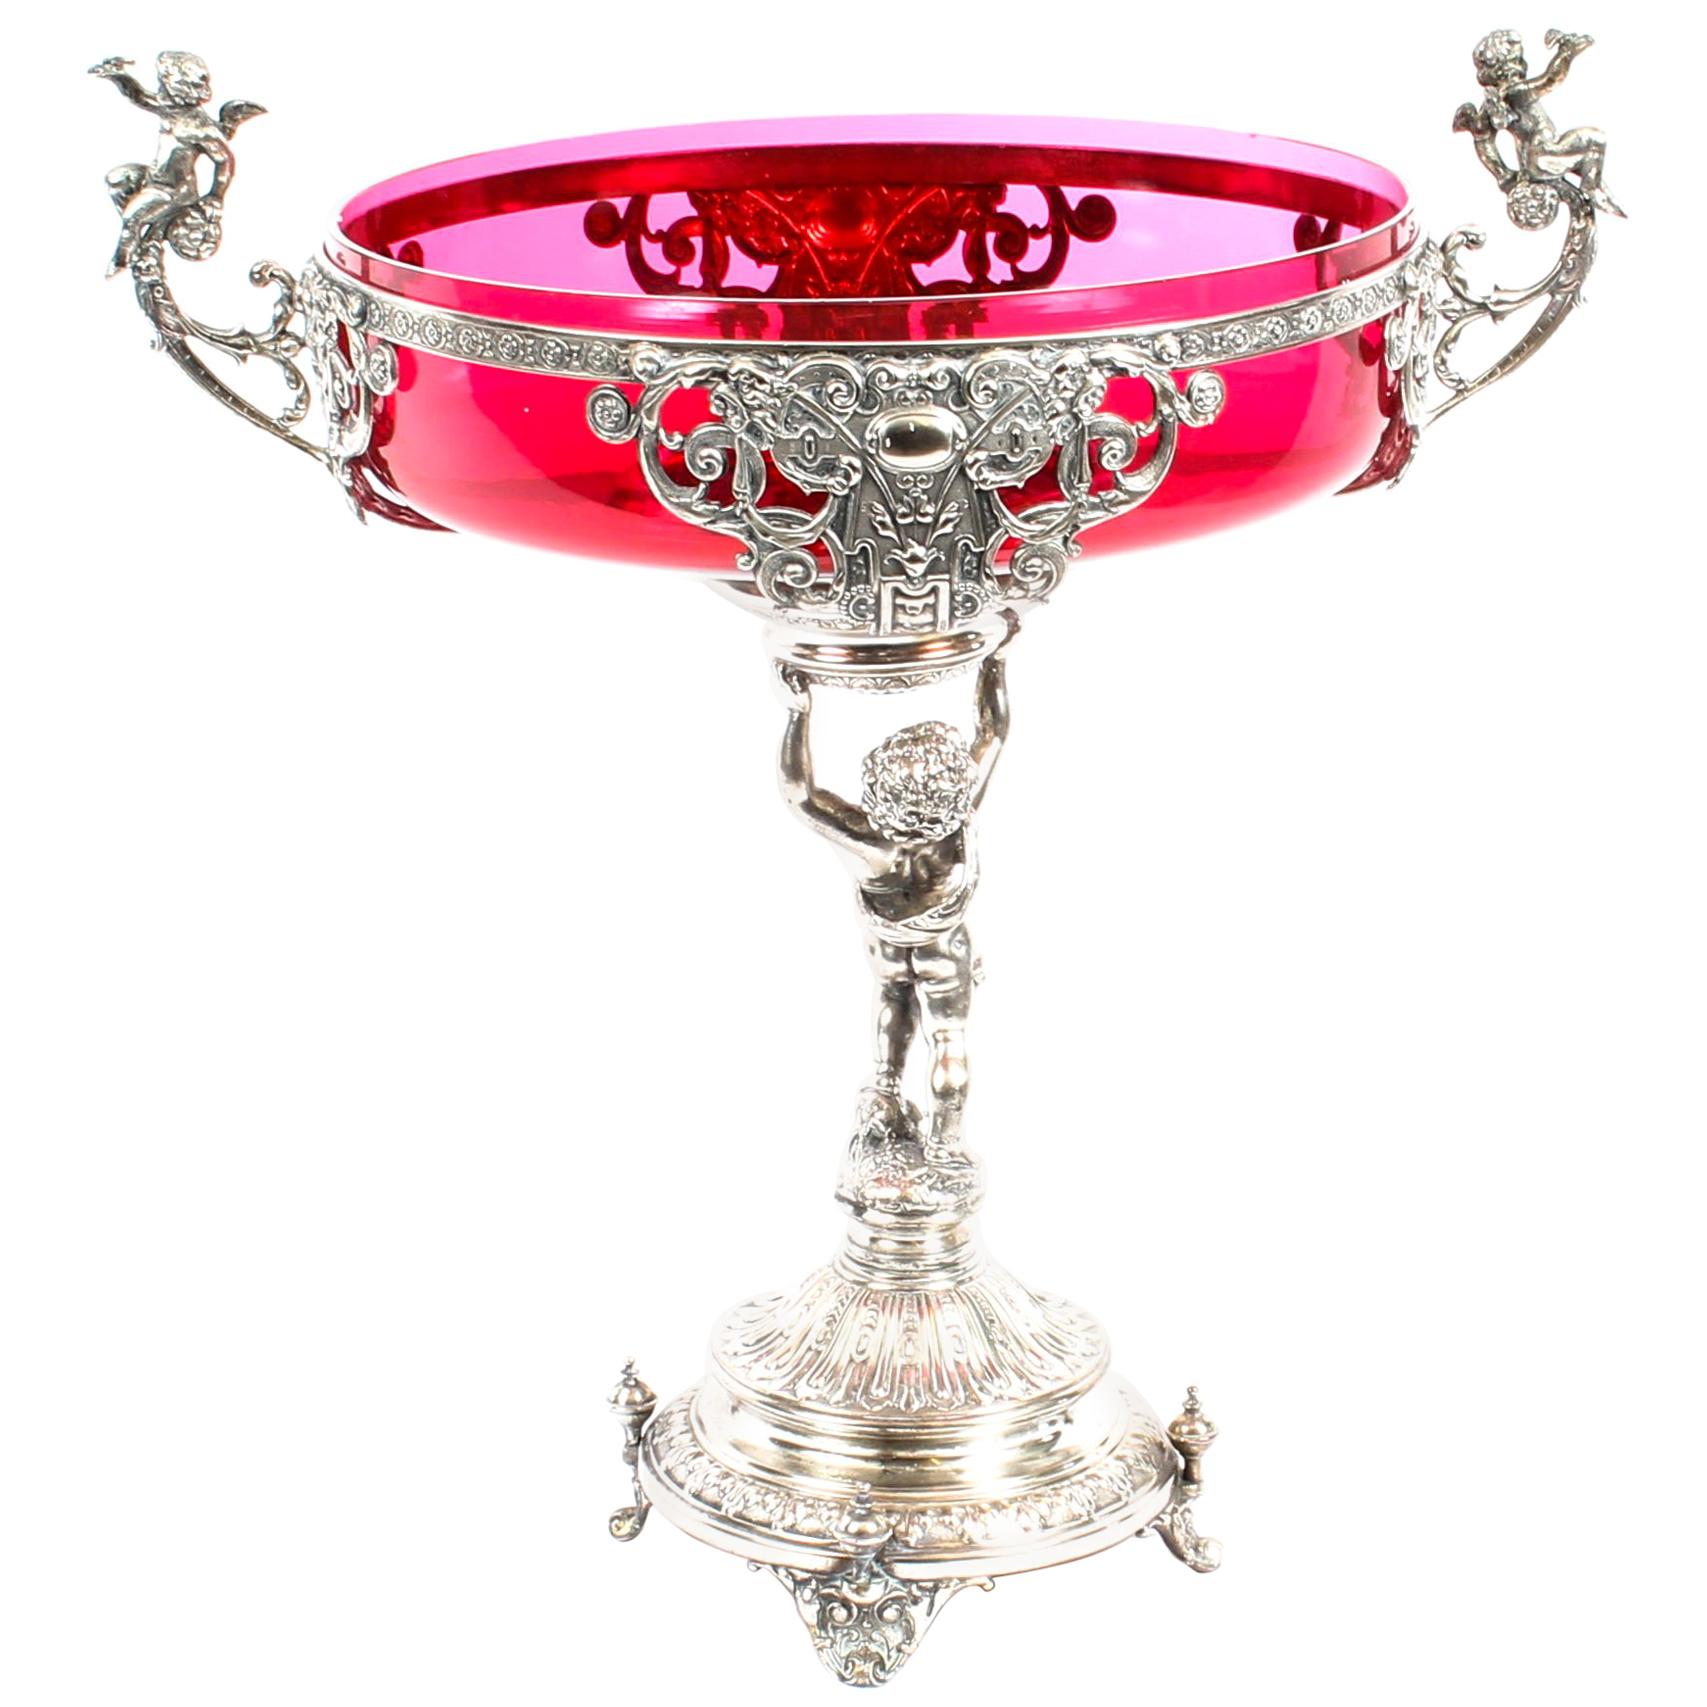 19th Century WMF Art Nouveau Silver Plated Centrepiece Cranberry Glass